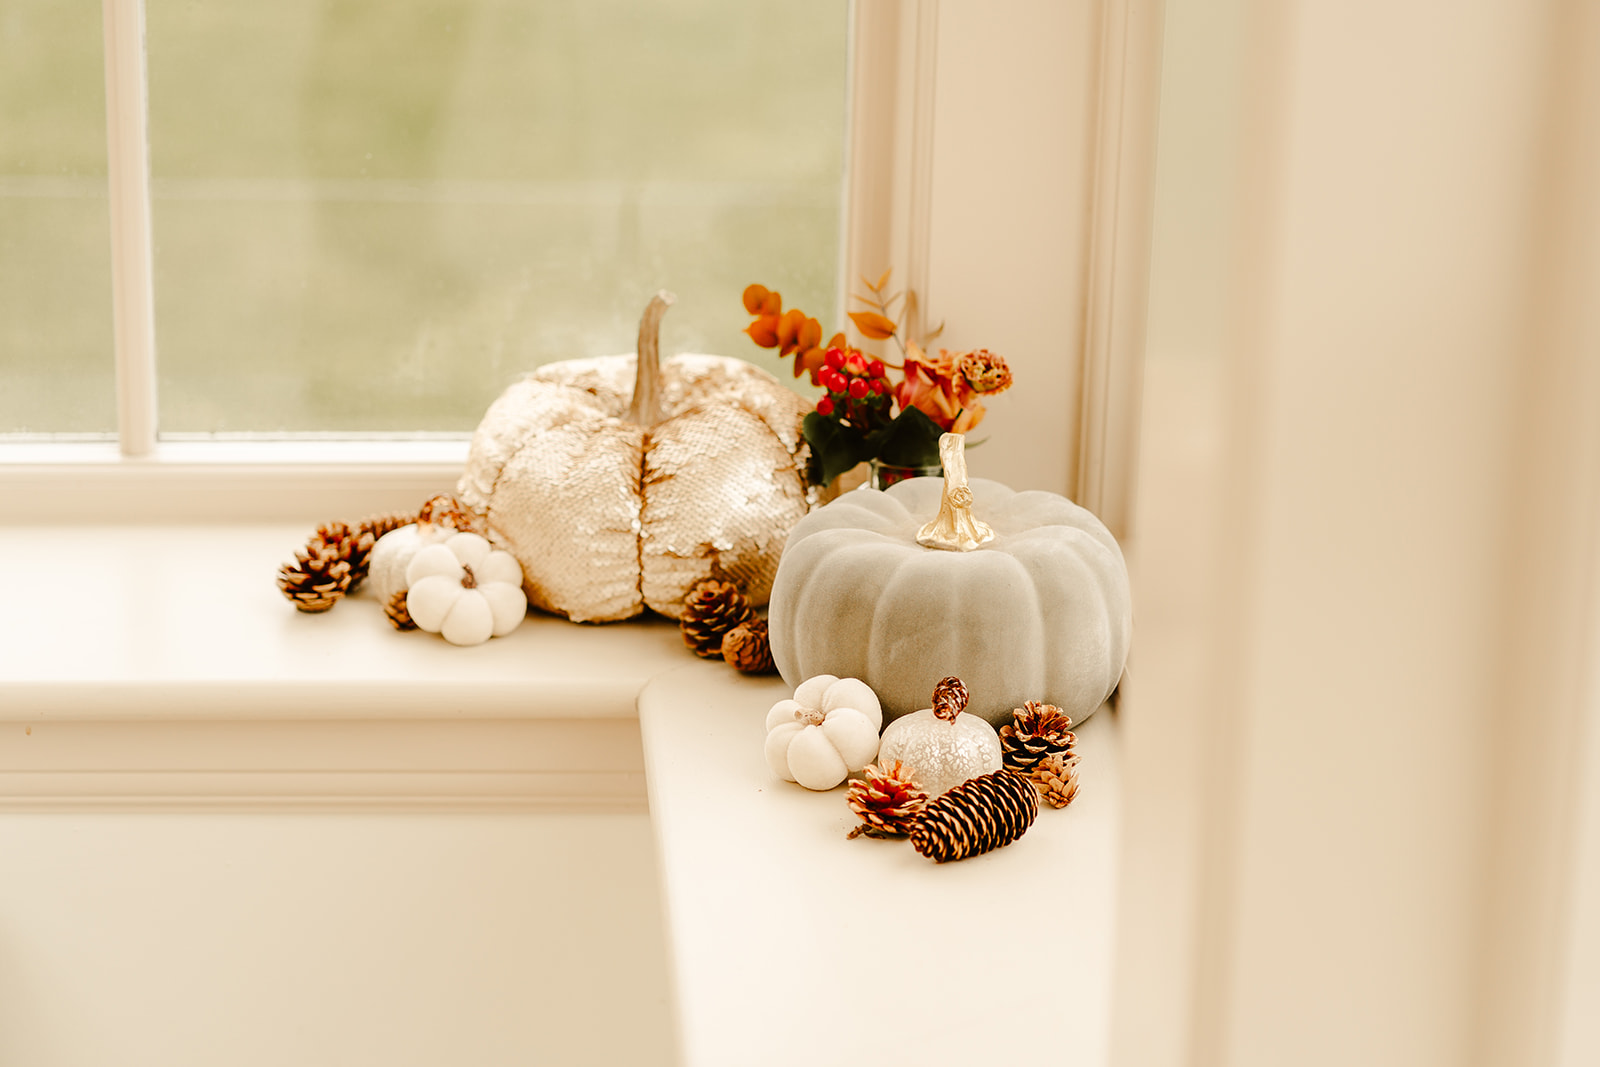 autumn pumpkin decorations on window sill